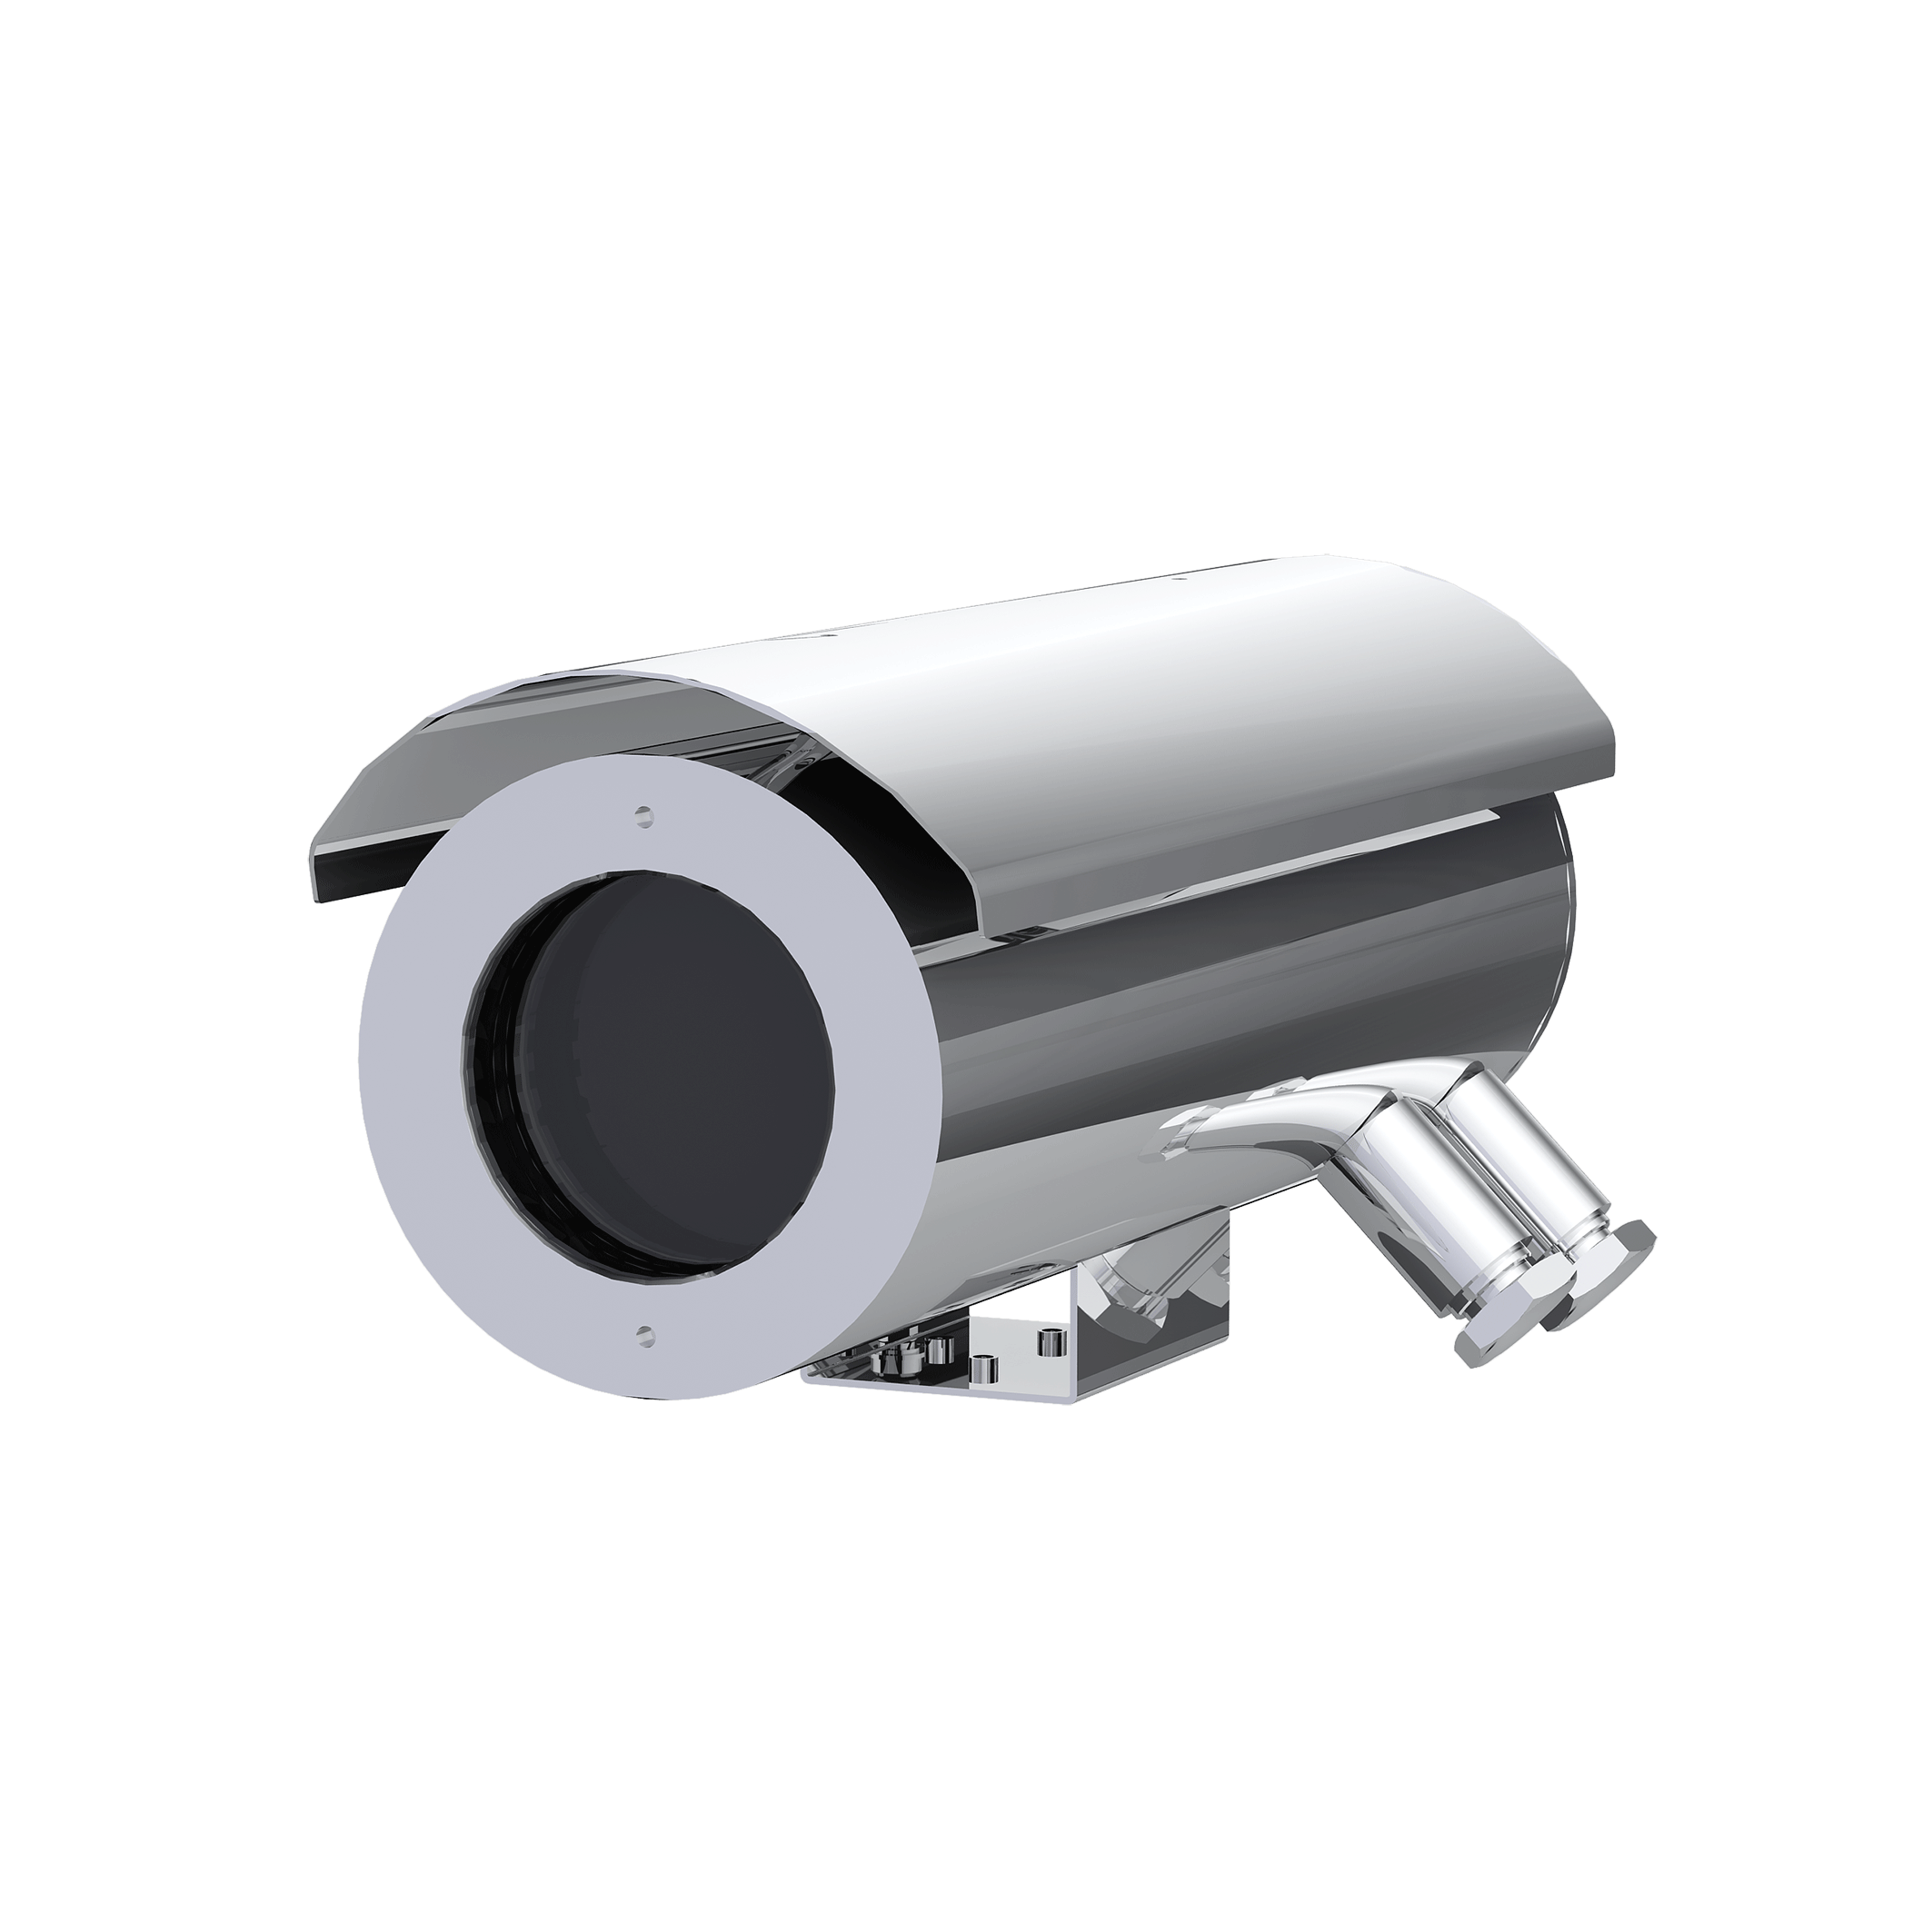 NMT-11HW防爆智能识别筒形摄像仪